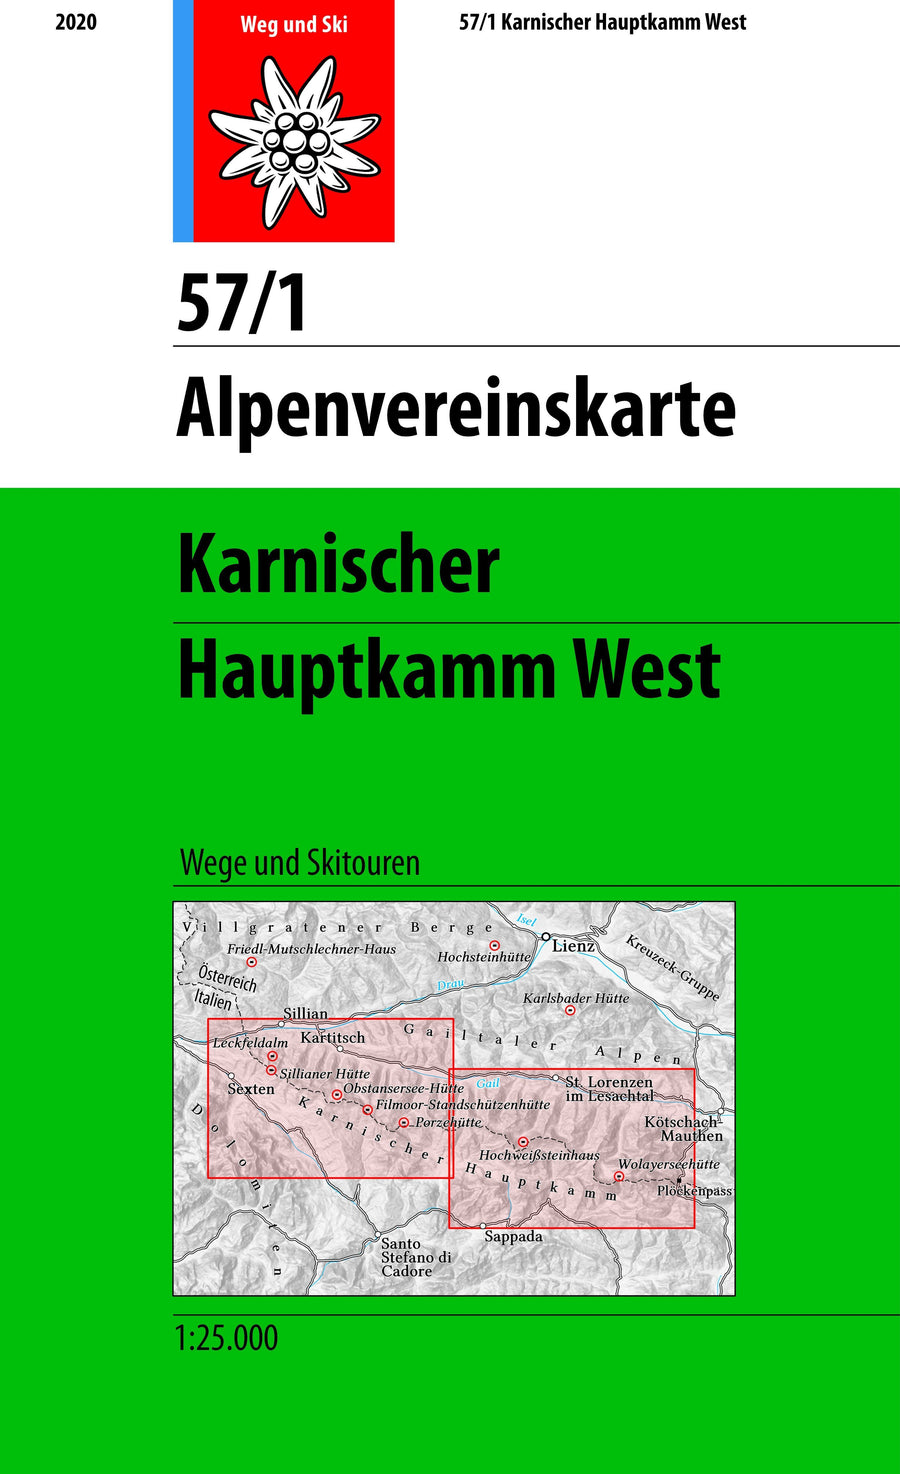 Carte de randonnée & ski n° 57/1 - Karnischer Hauptkamm West (Alpes carniques, Italie) | Alpenverein carte pliée Alpenverein 